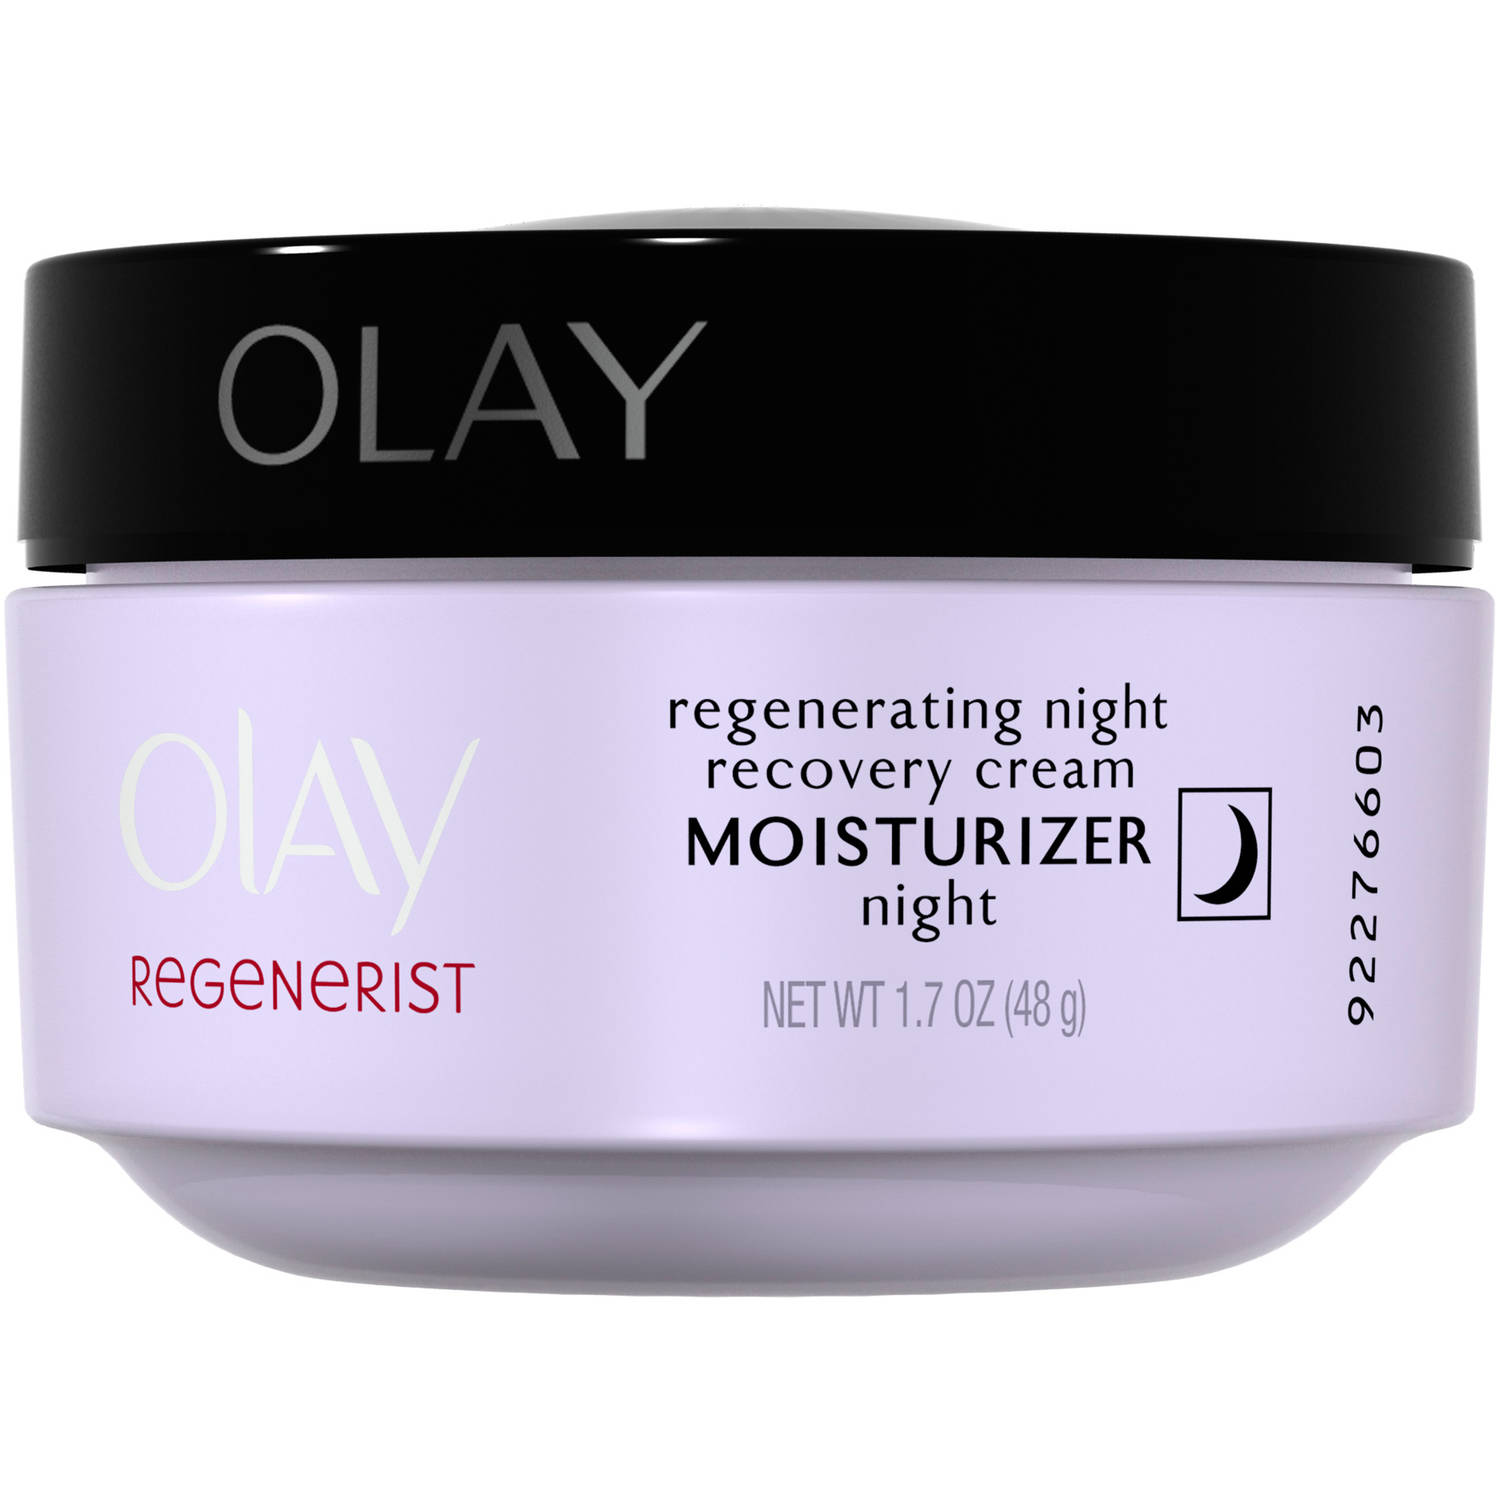 Olay Regenerist Night Recovery Cream Moisturizer, 1.7 oz - image 1 of 10